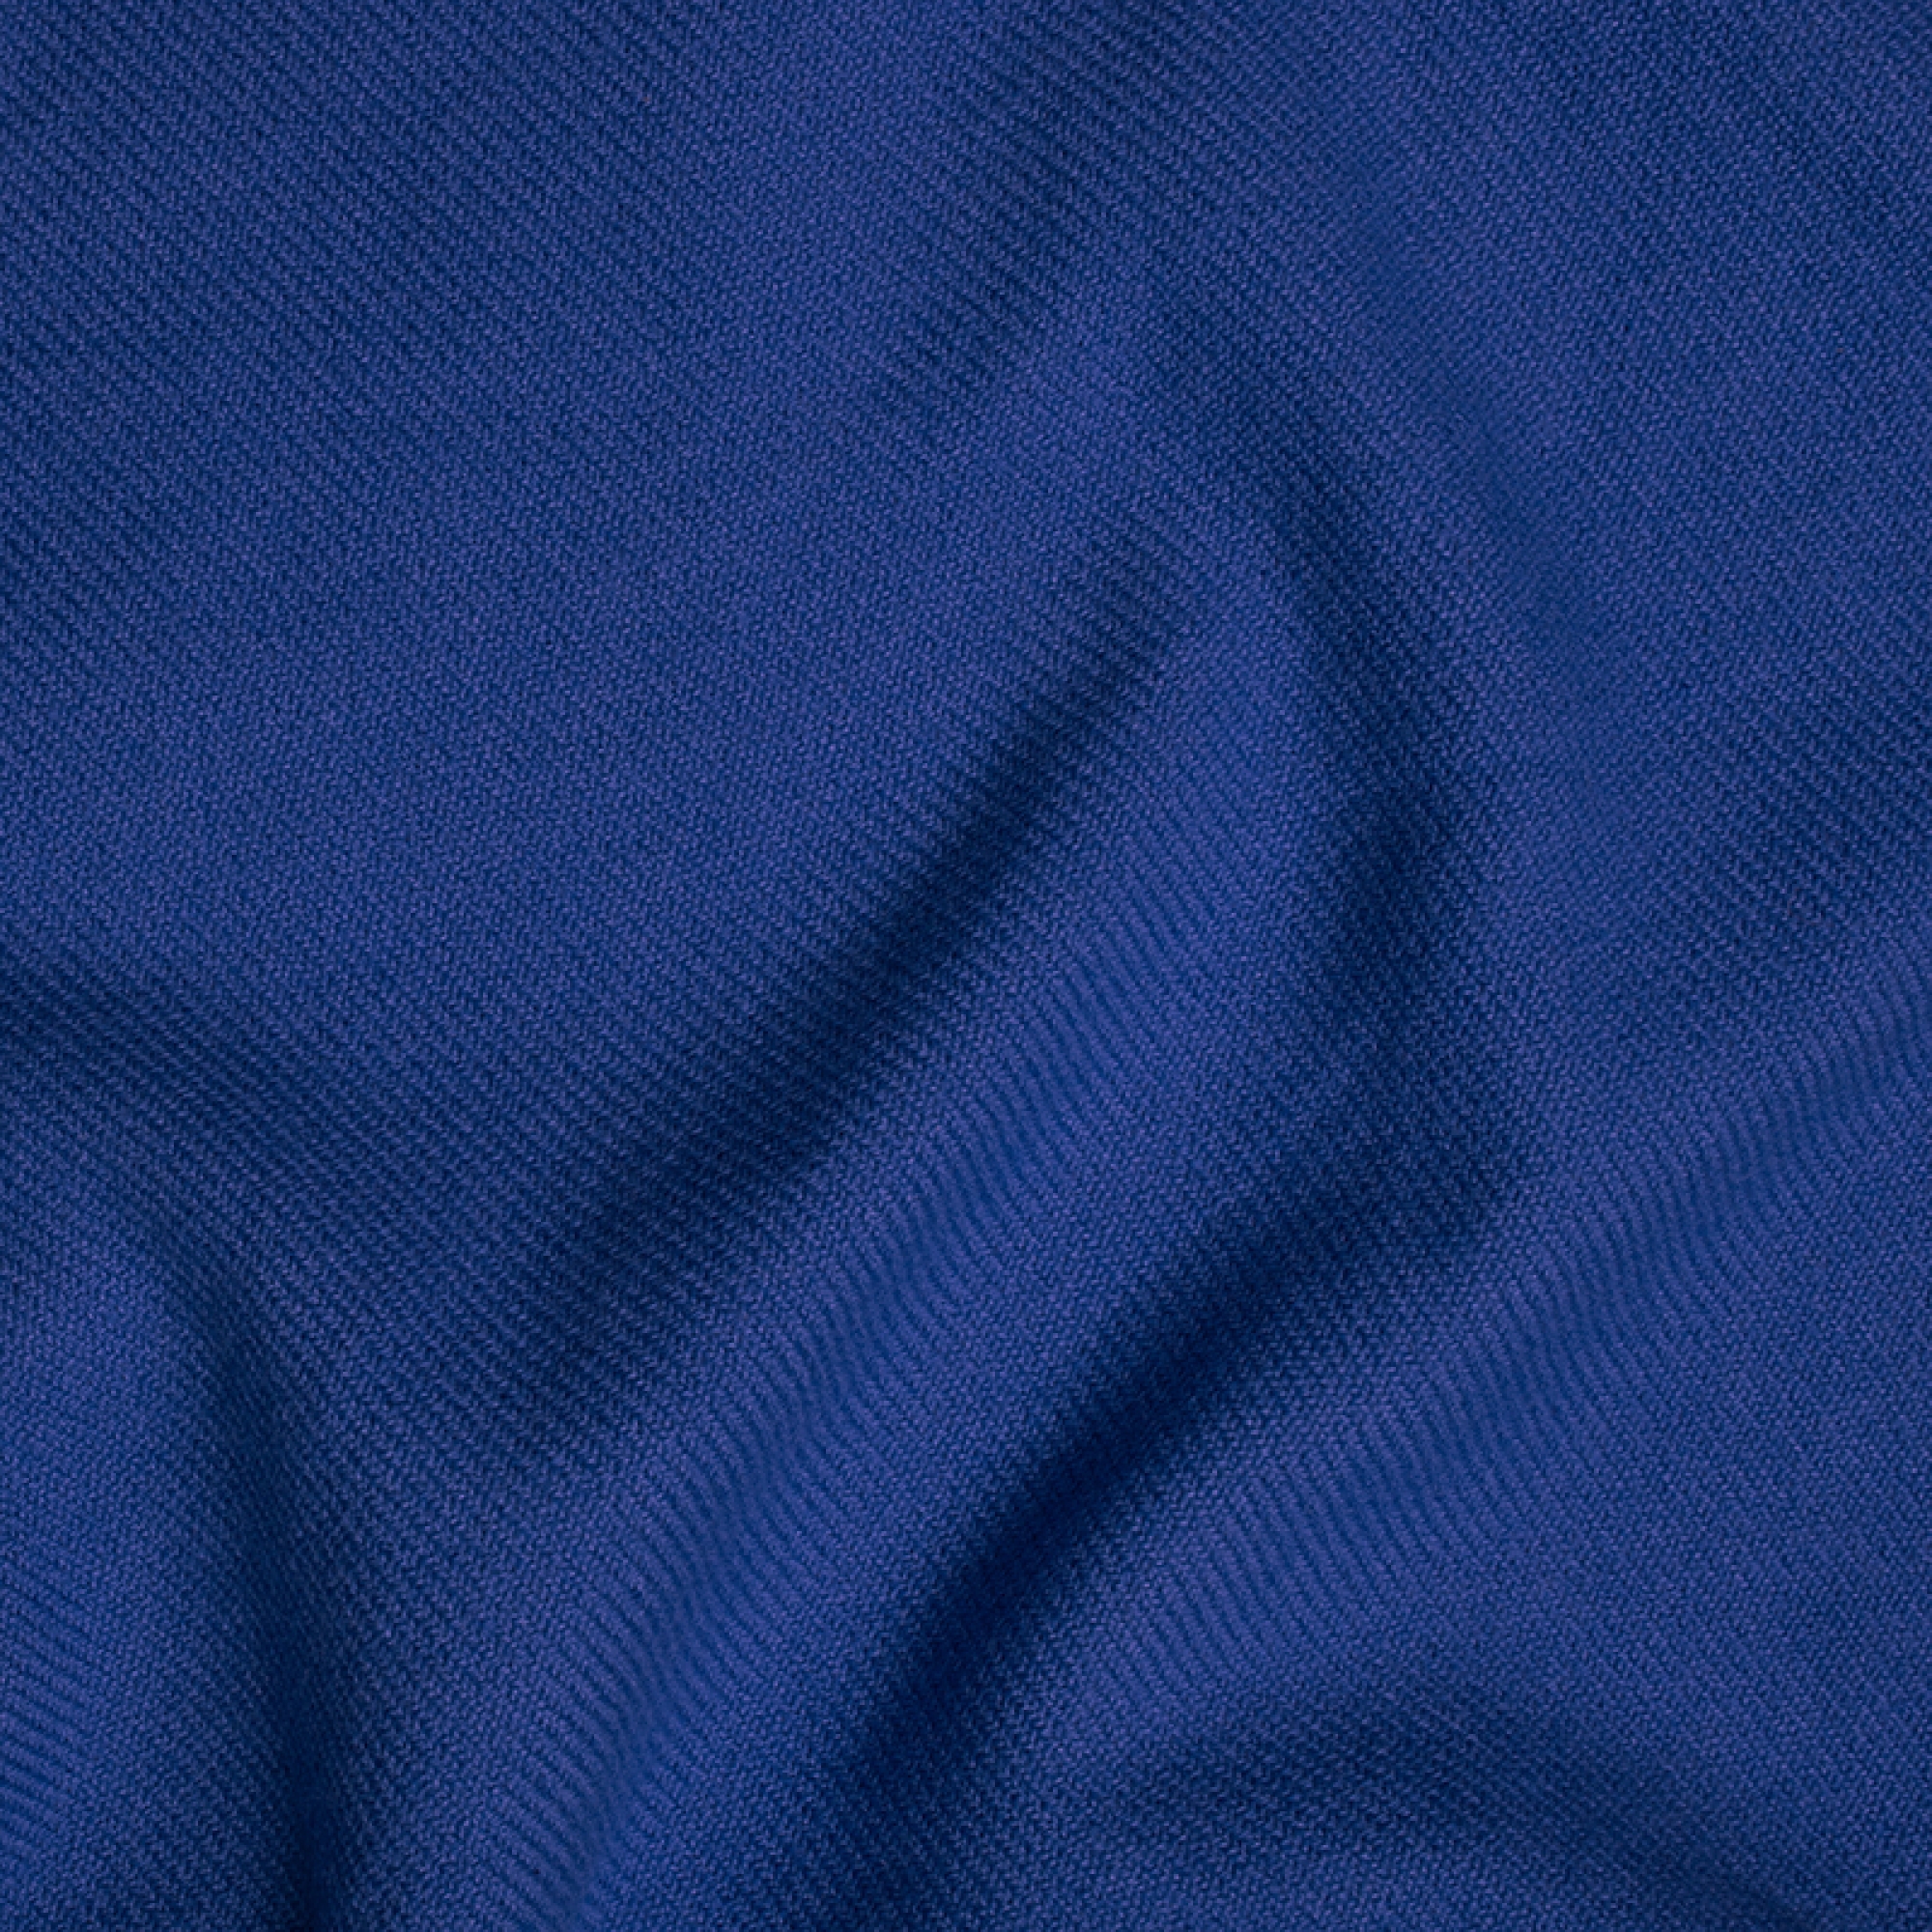 Cachemire pull femme toodoo plain m 180 x 220 bleuet 180 x 220 cm